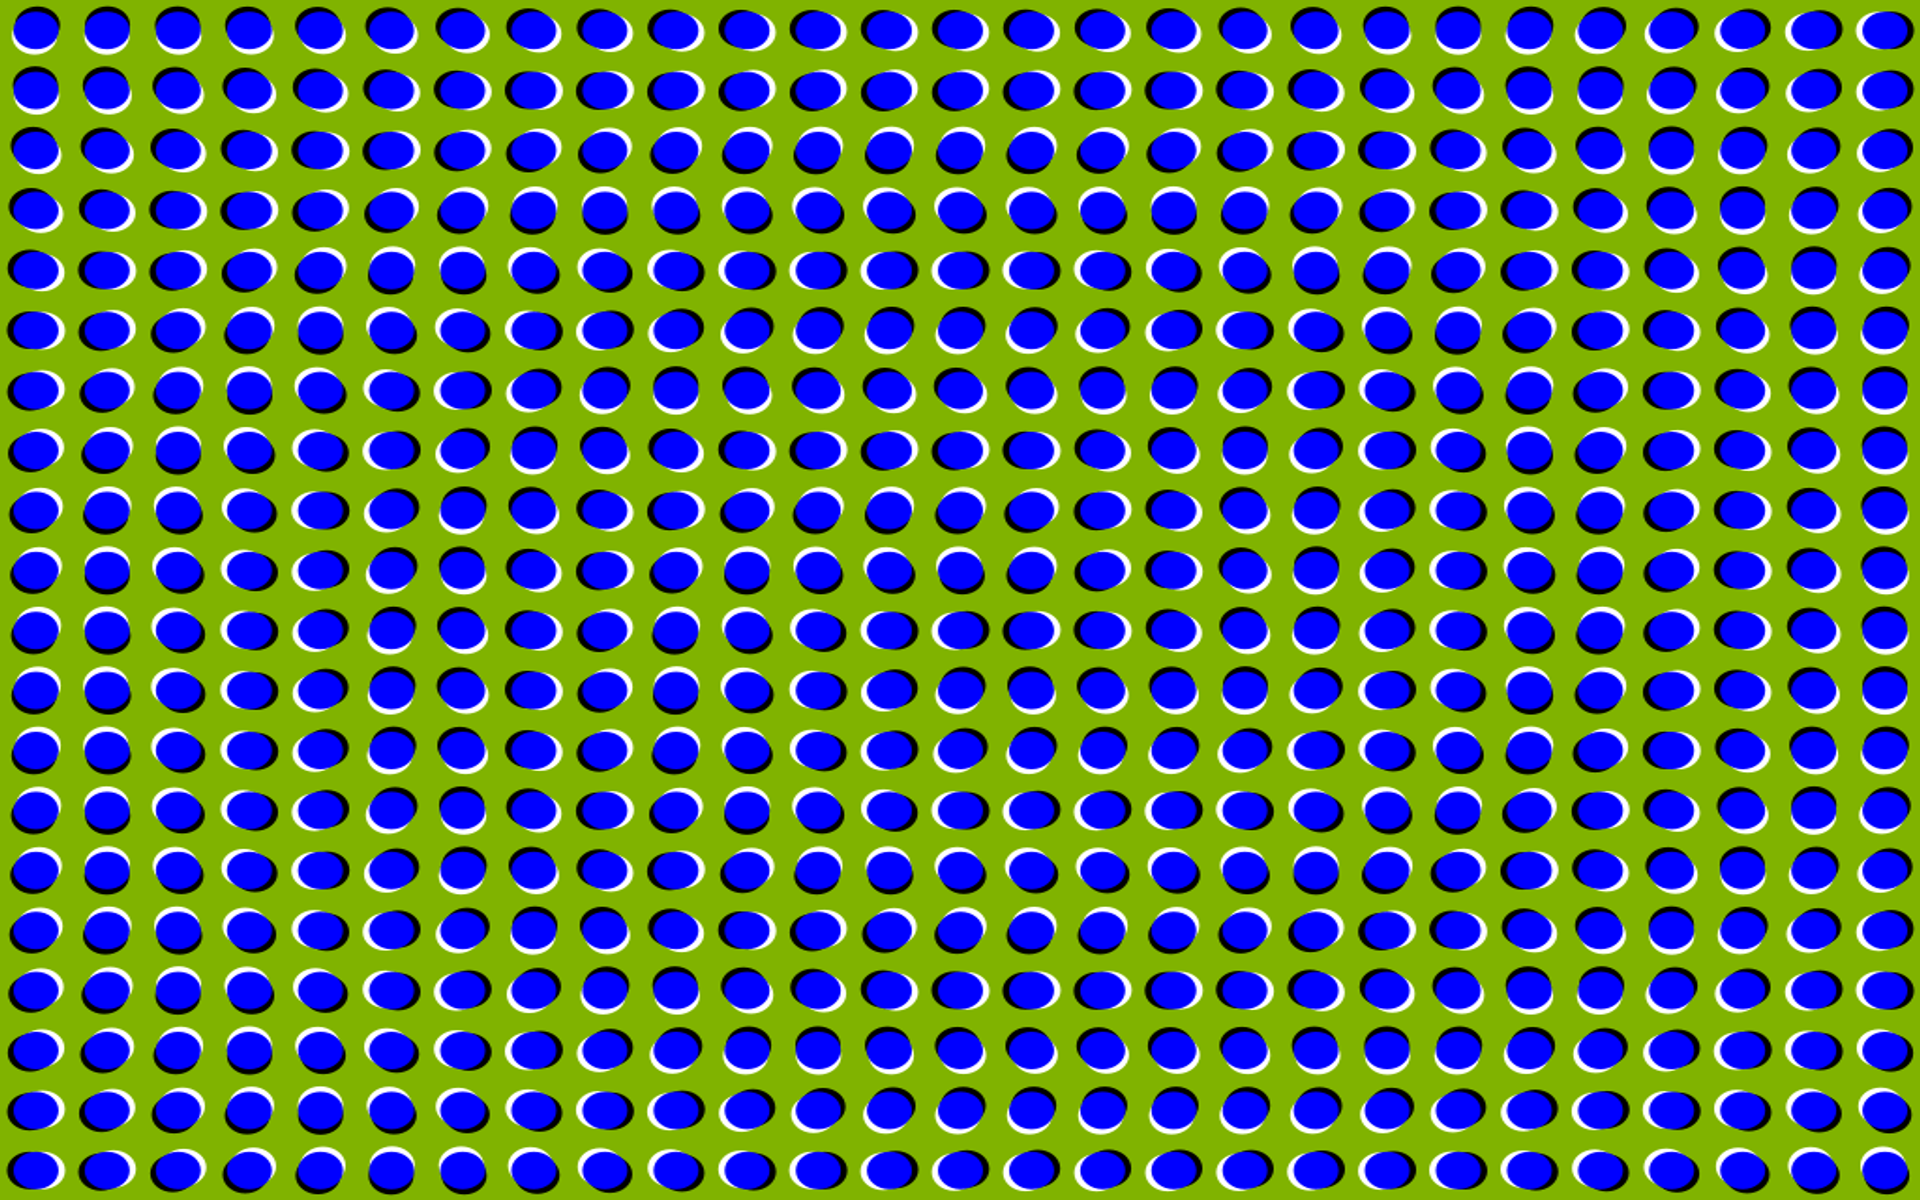 optical illusions iphone wallpaper